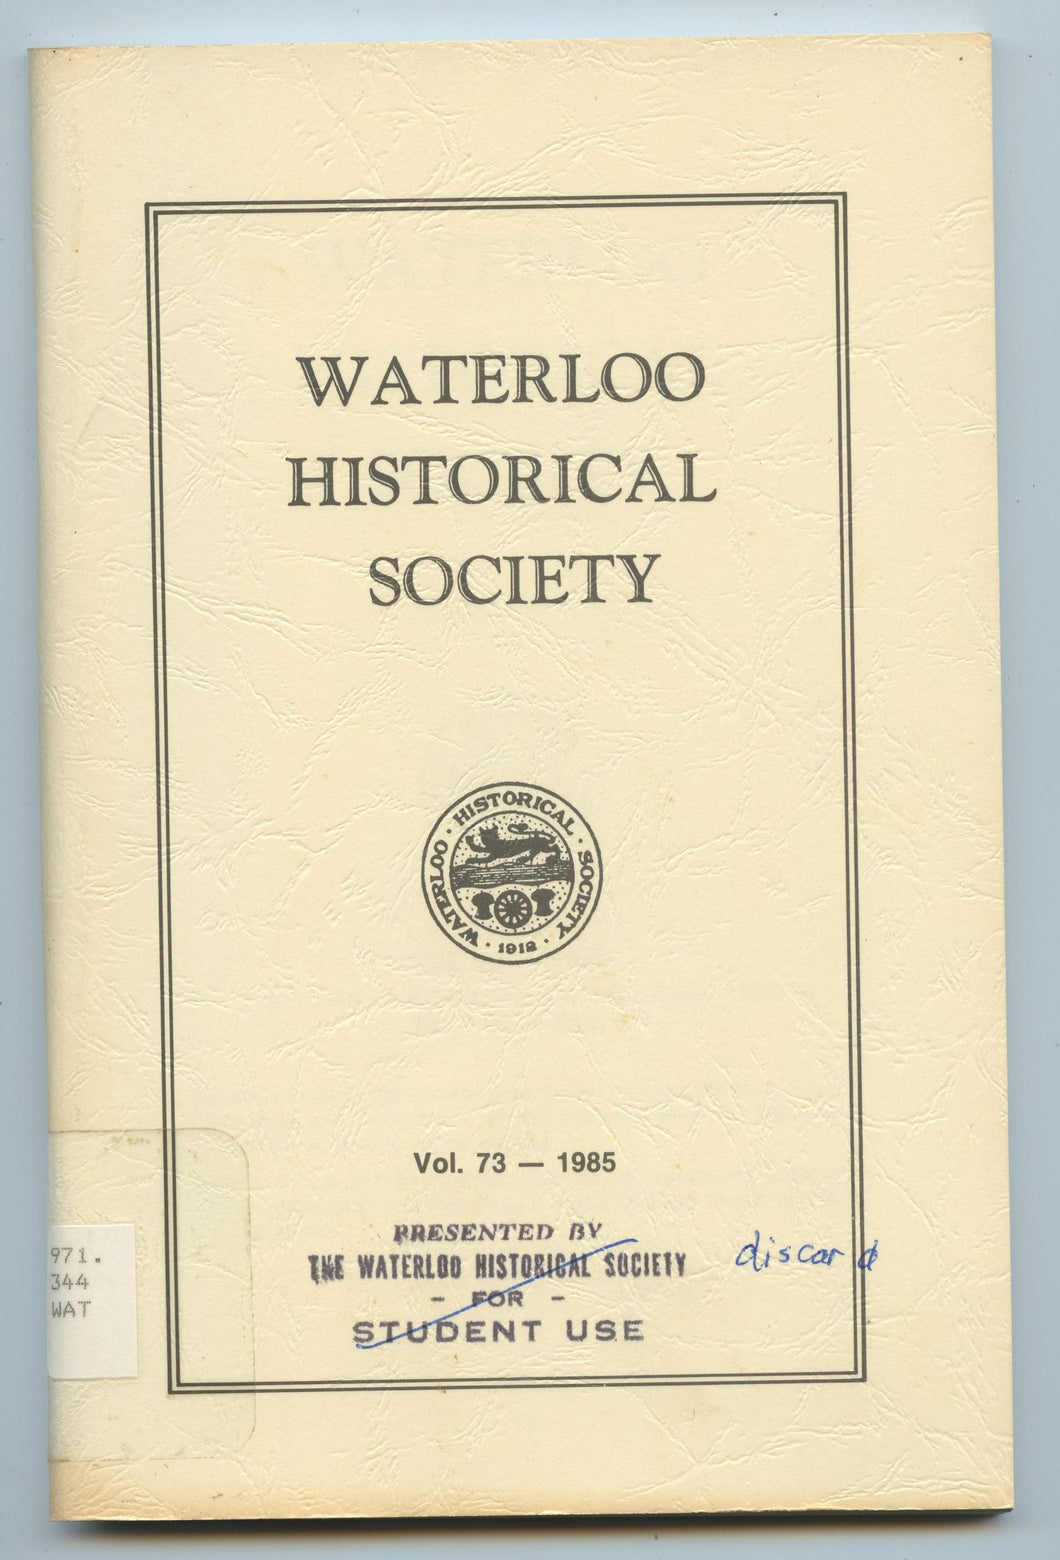 Waterloo Historical Society Vol. 73 - 1985